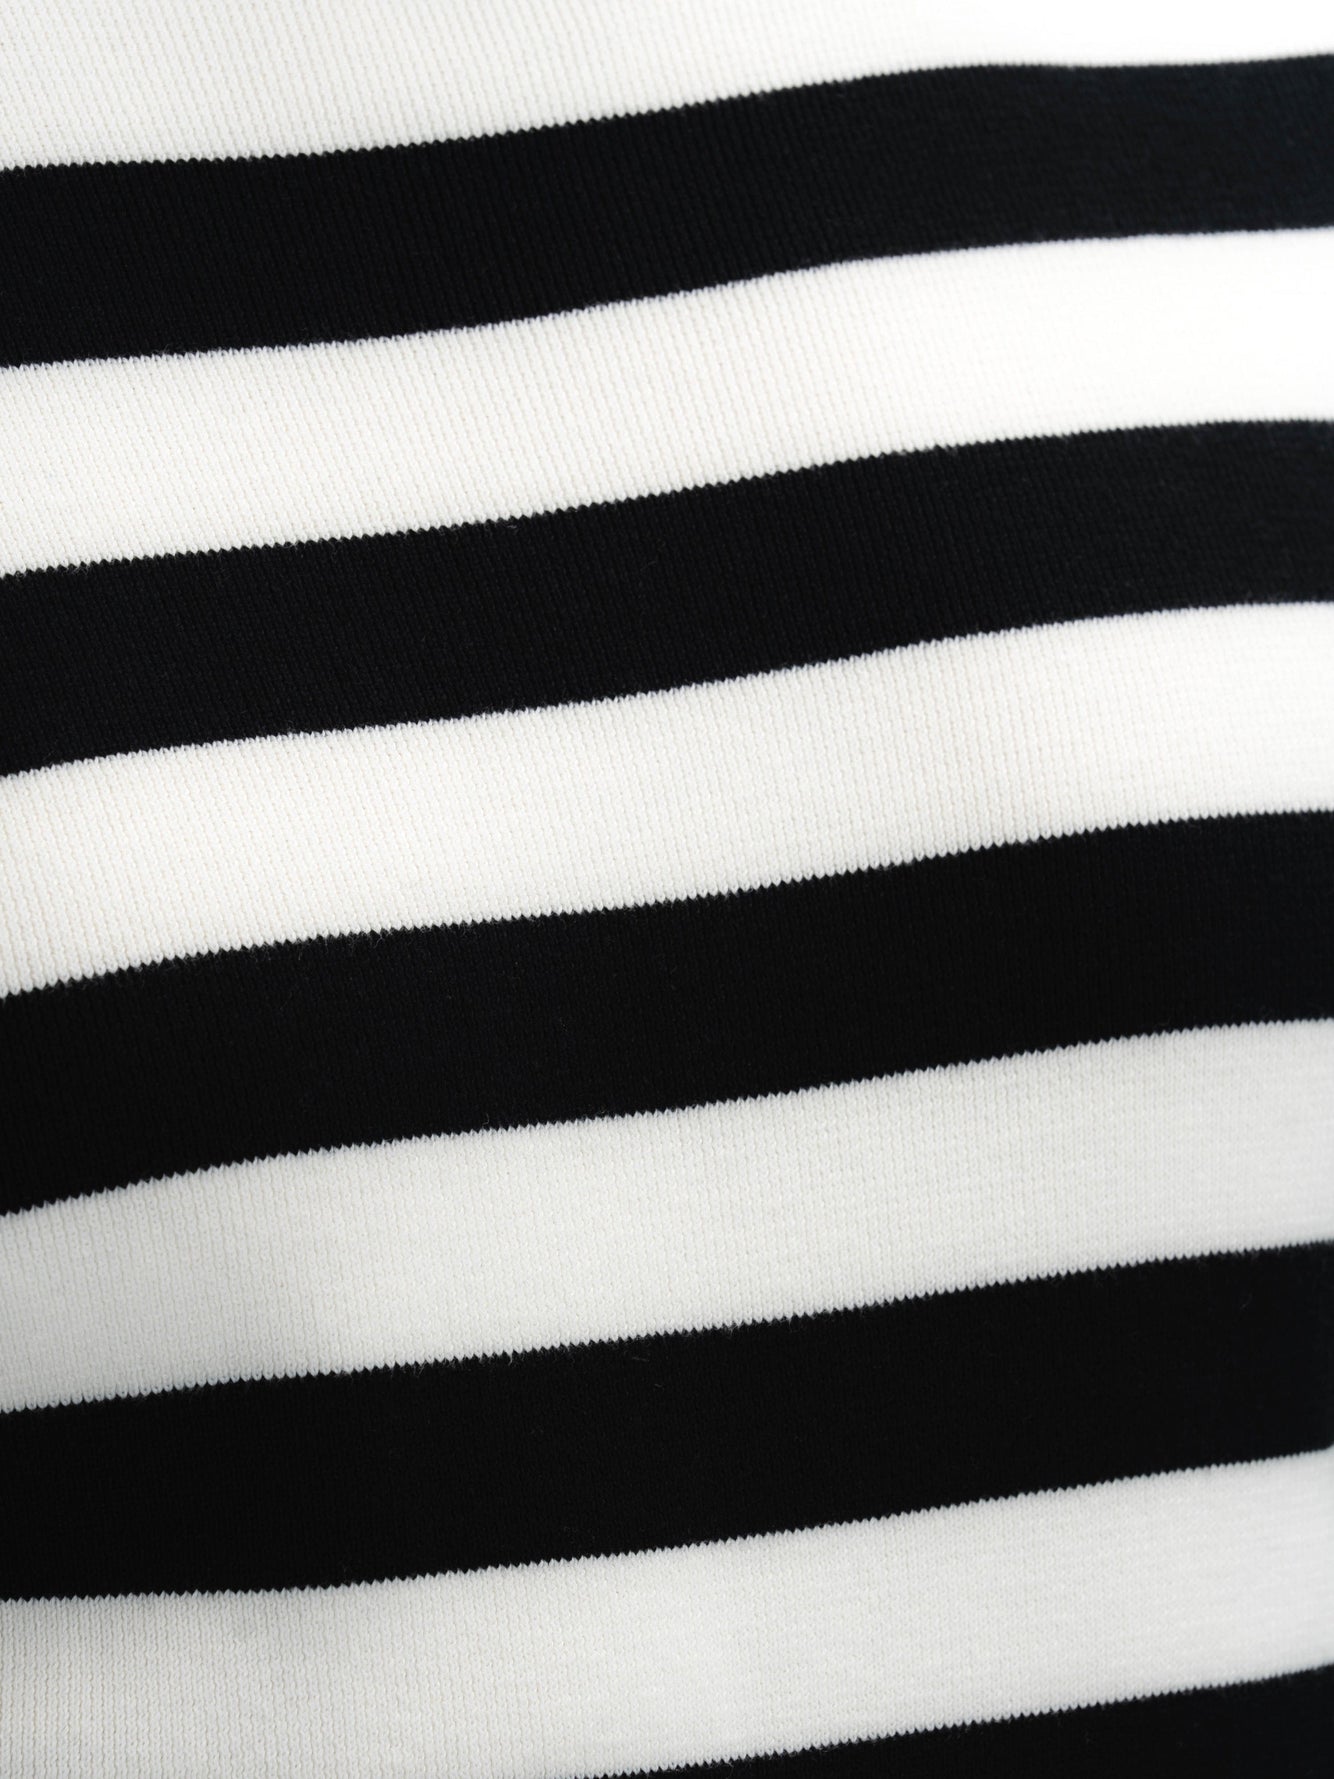 Black White Striped Turtleneck - Grand Le Mar